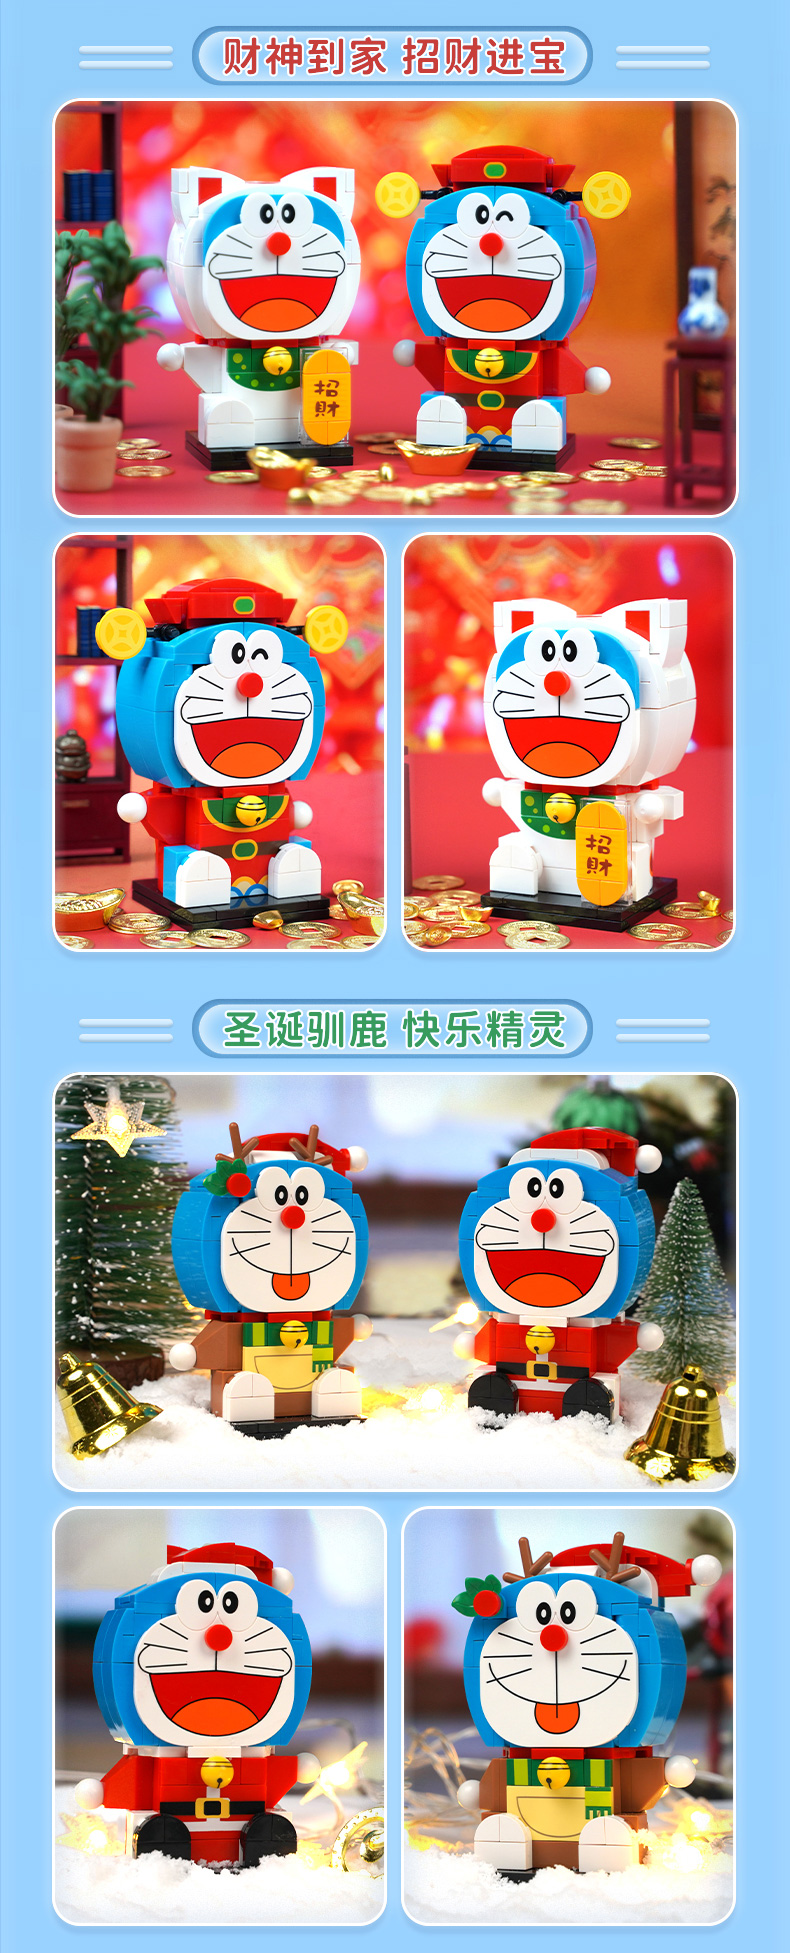 Keeppley K20403 Doraemon God of WealthBaustein-Spielzeugset